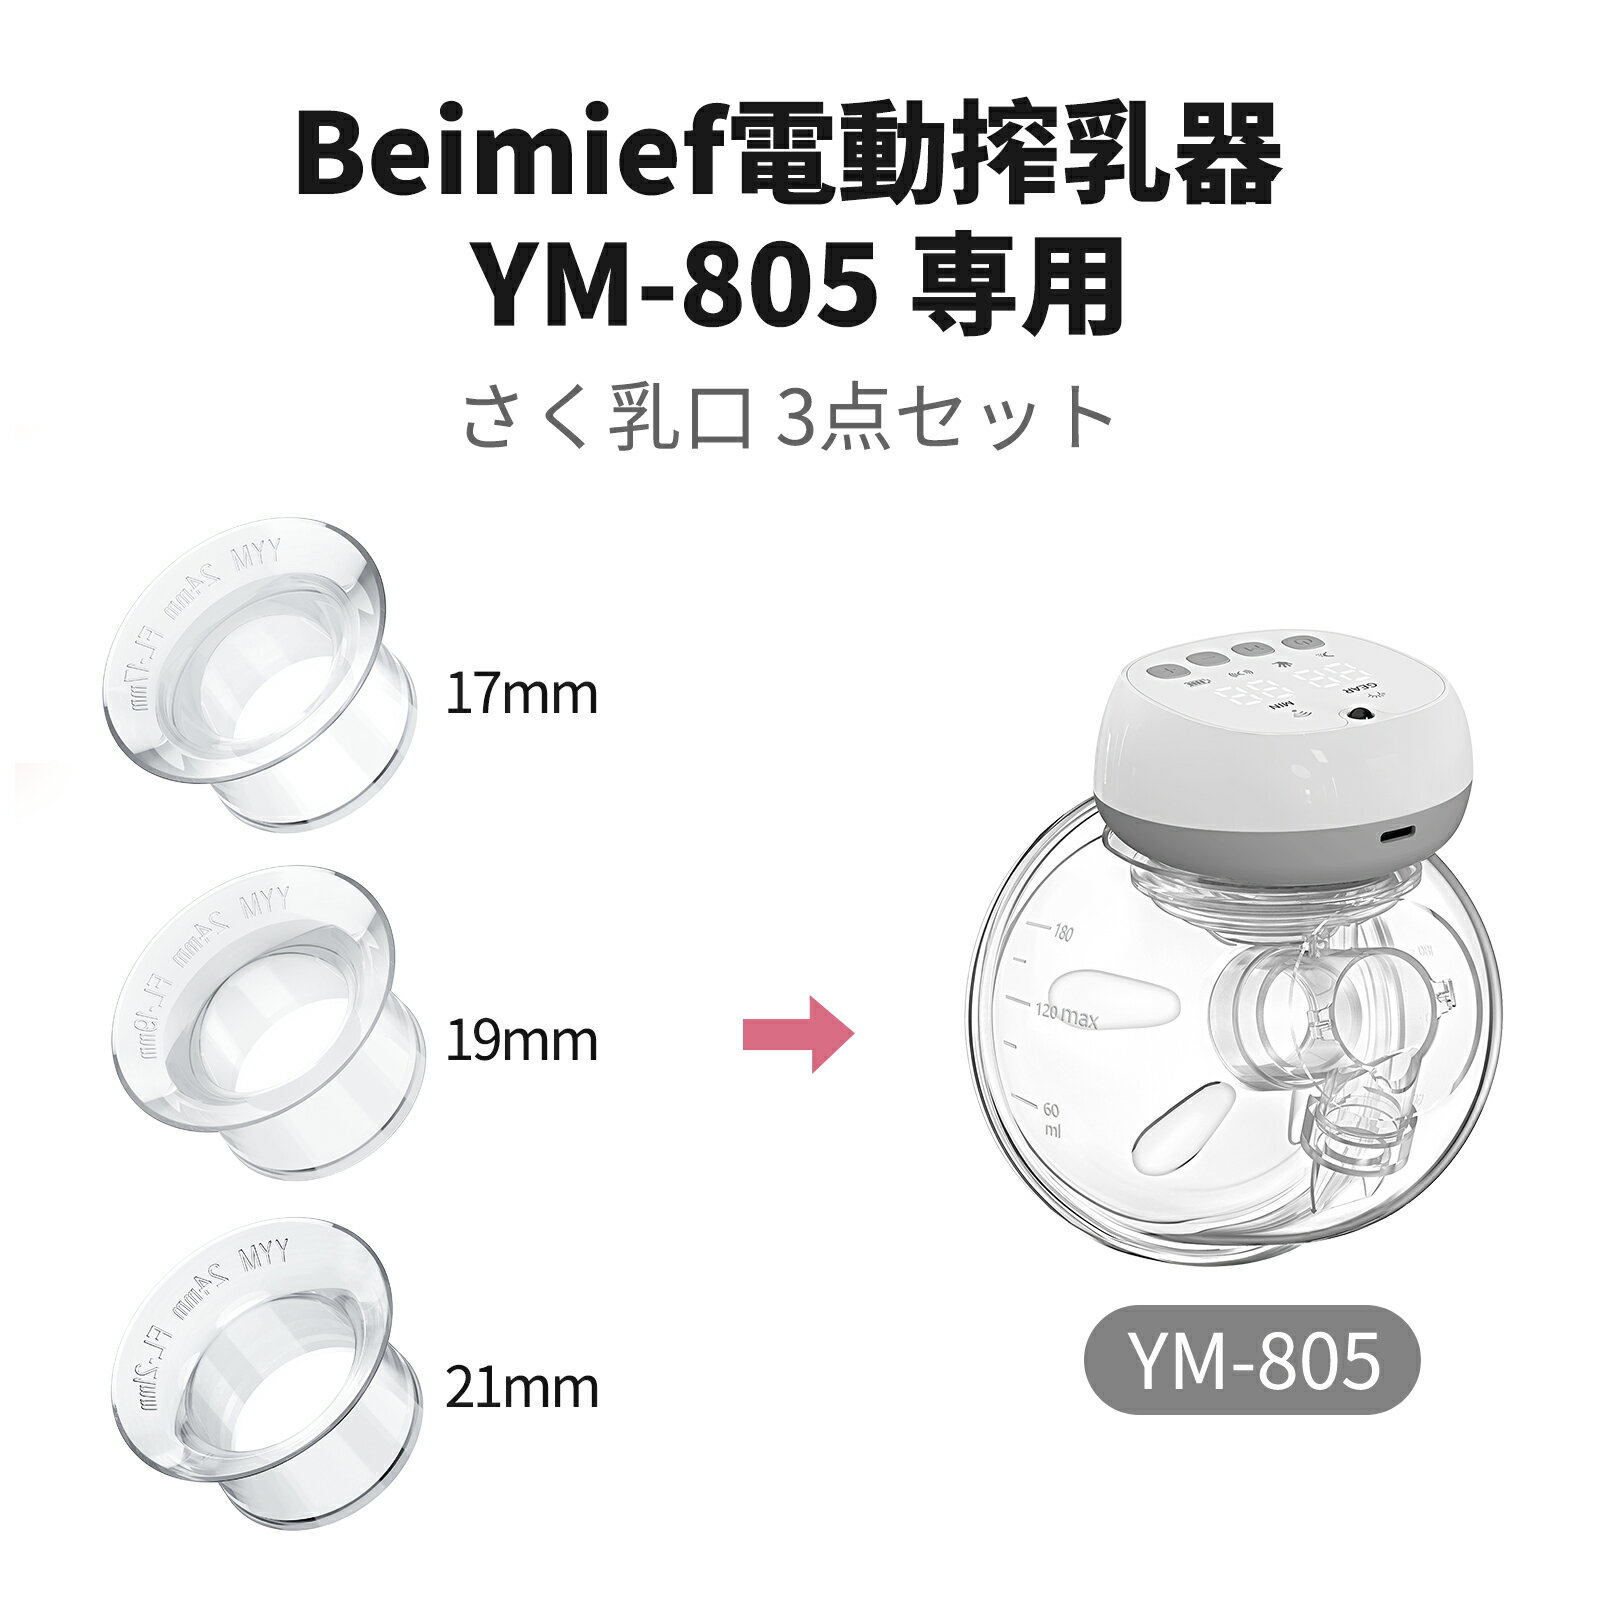 YM805搾乳機 さく乳口 3個セット 17/19/21mm 搾乳口 搾乳機の切り替えカップ